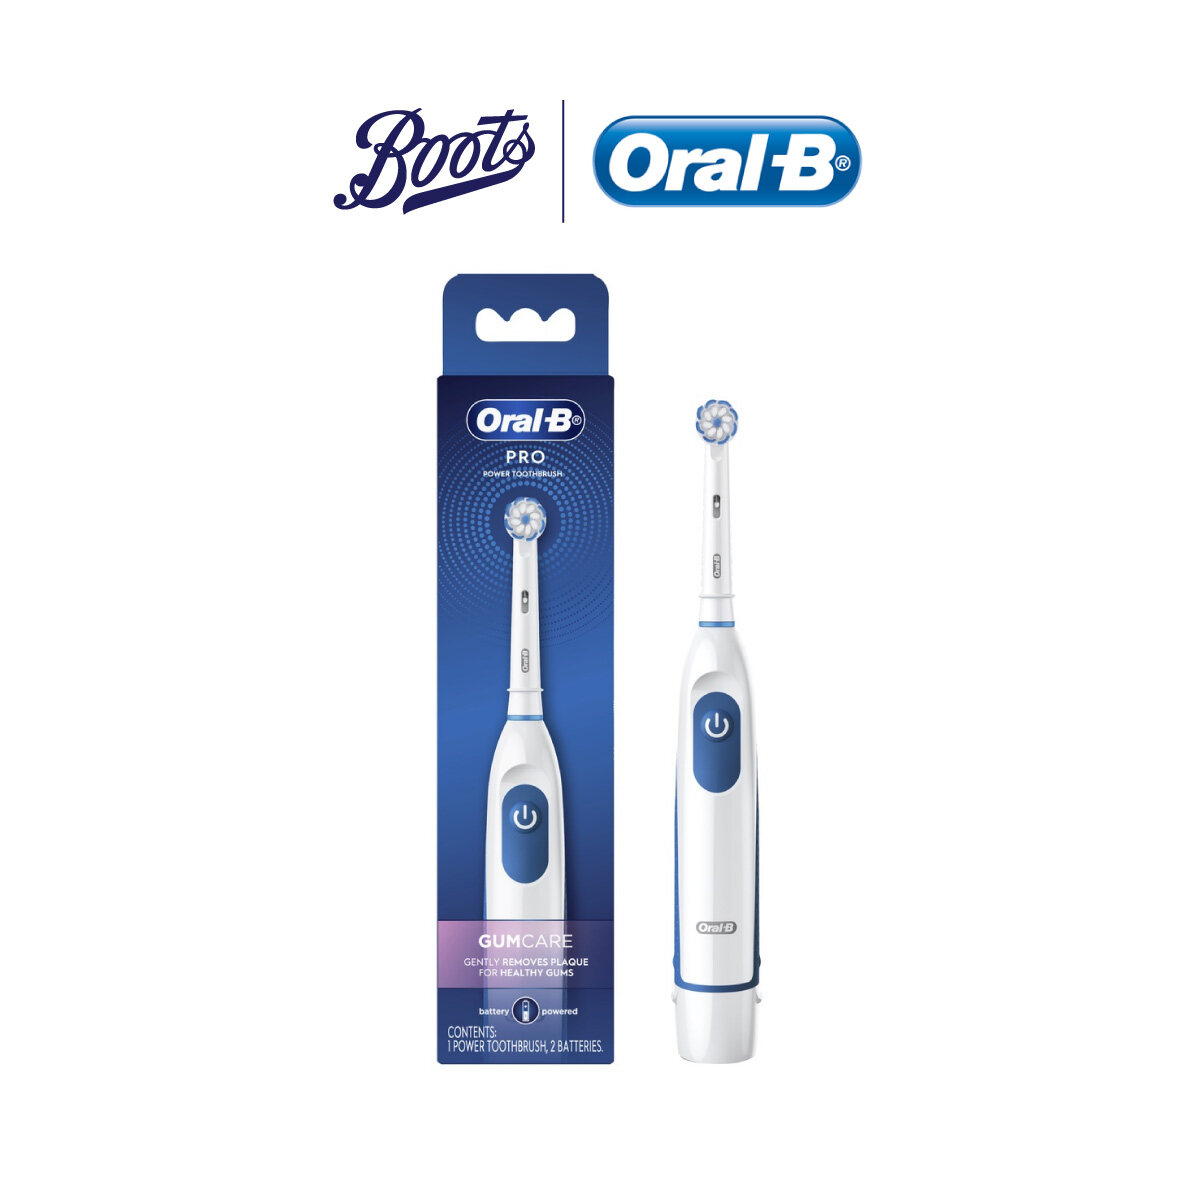 Oral B Electric Toothbrush Pro Gum Care ออรัล บี แปรงสีฟันไฟฟ้า โปร กัมแคร์ Th 